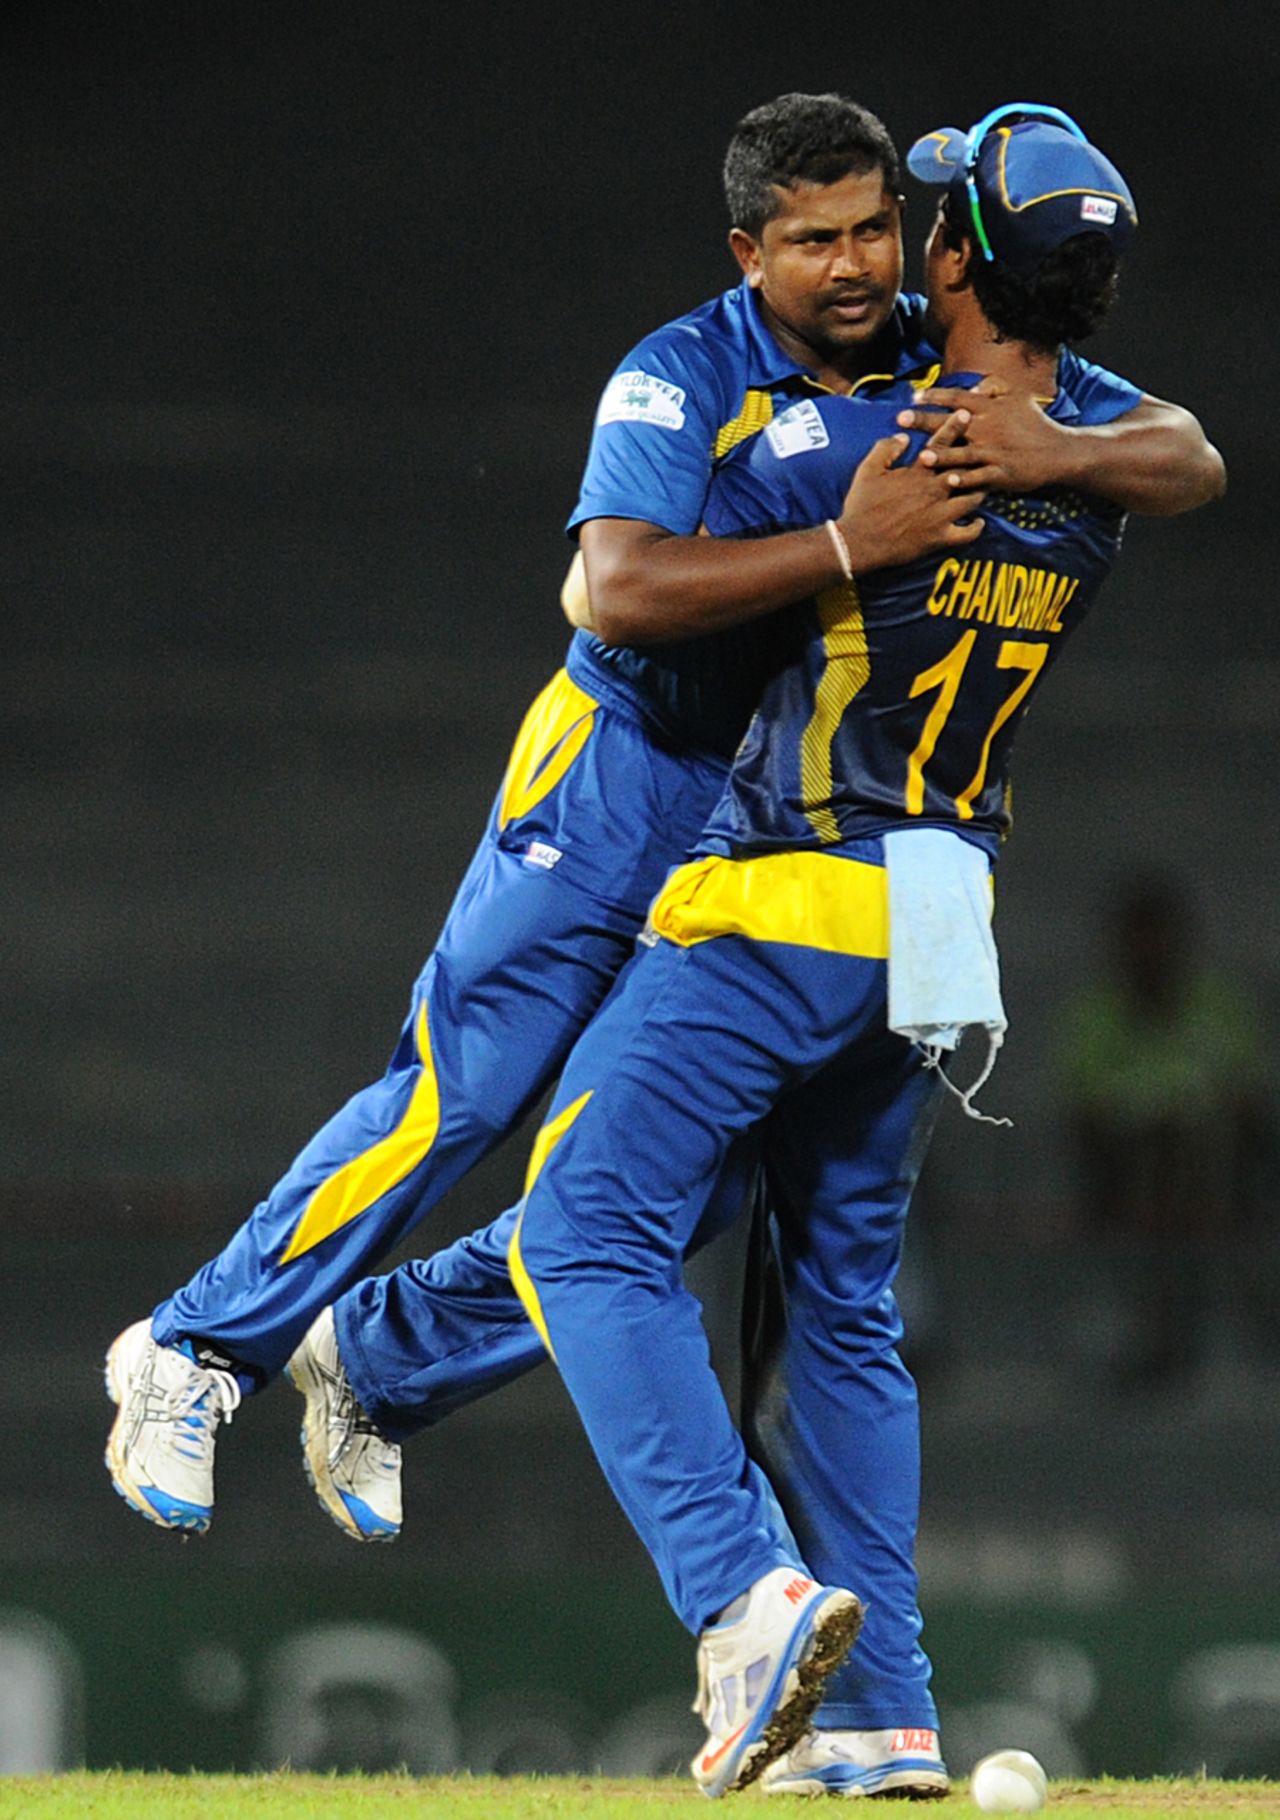 Rangana Herath and Dinesh Chandimal celebrate a wicket, Sri Lanka v South Africa, 2nd ODI, Colombo, July 23, 2013